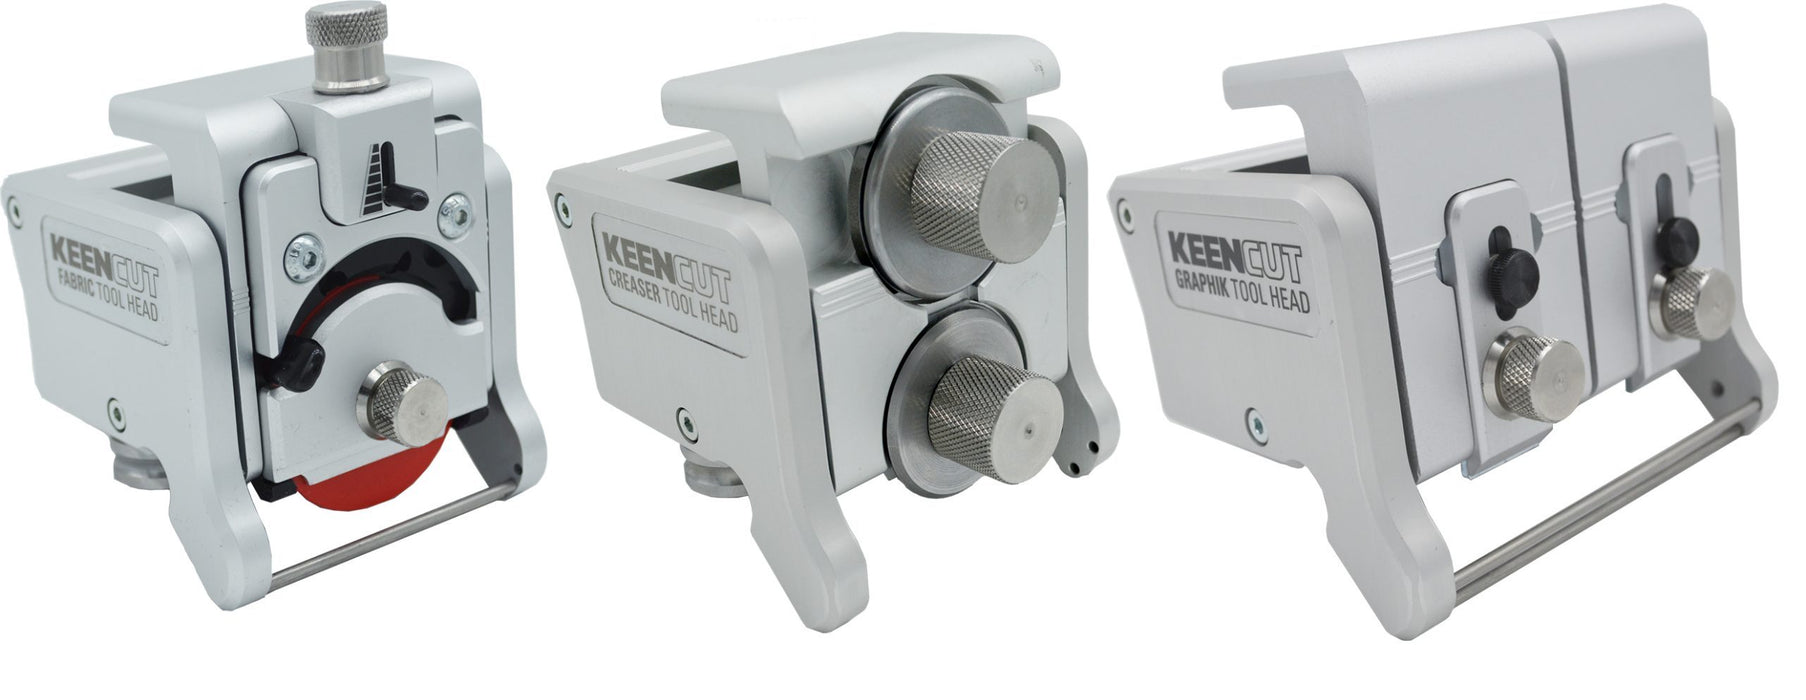 Keencut Evolution3 - FreeHand Series Cutter